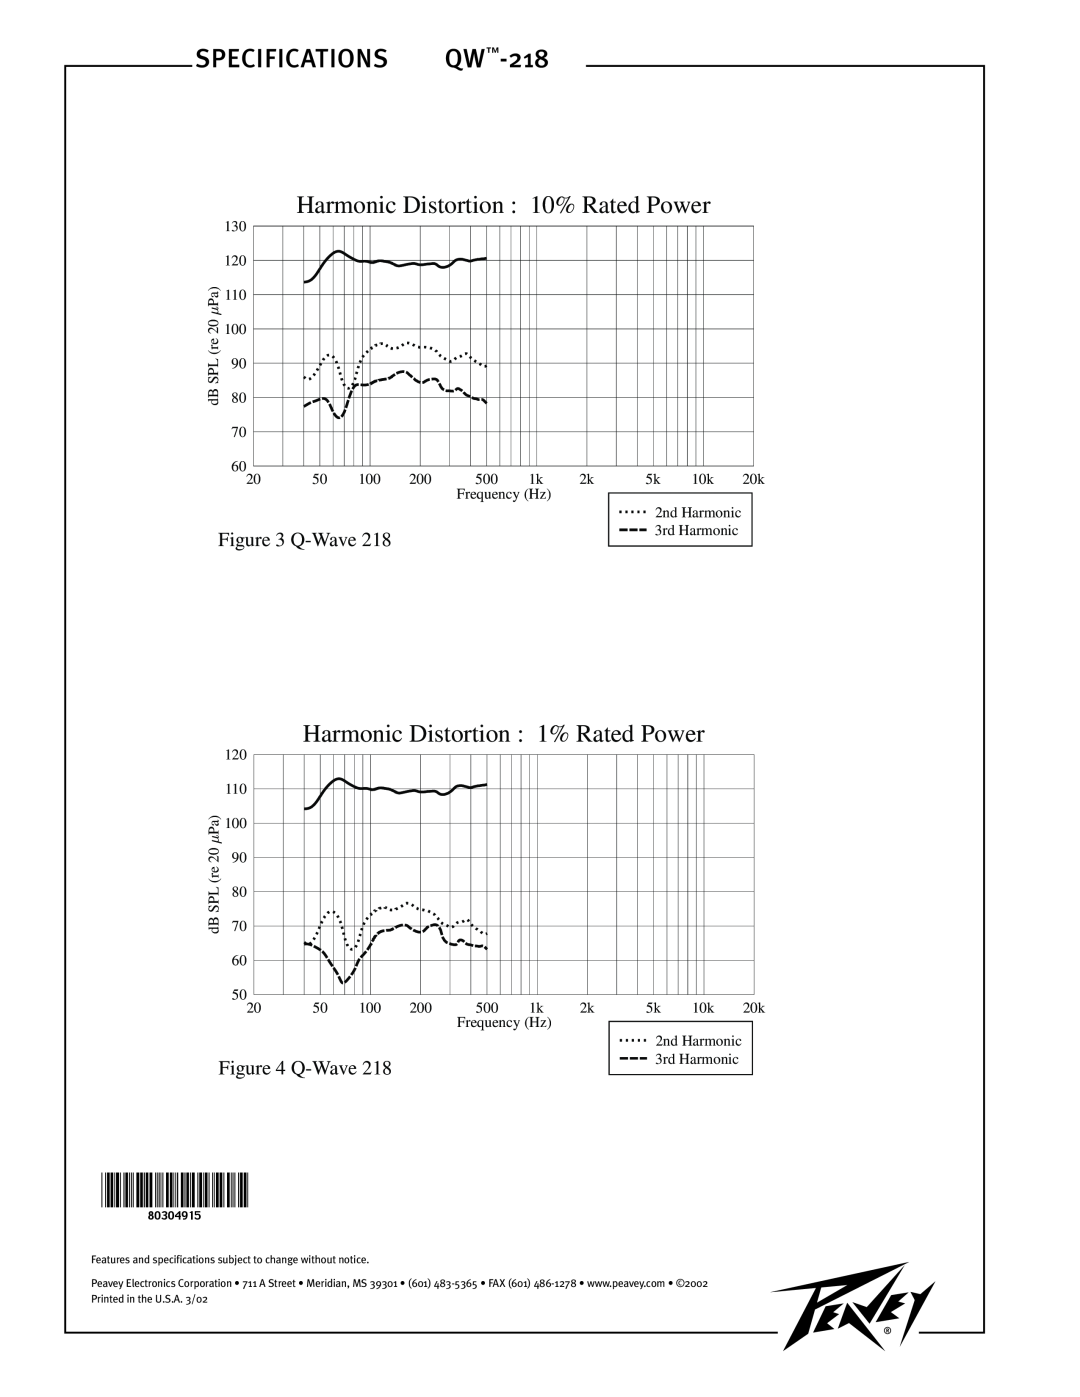 Peavey QW 218 Harmonic Distortion 10% Rated Power, Harmonic Distortion 1% Rated Power, Q-Wave218, SPECIFICATIONS QW-218 